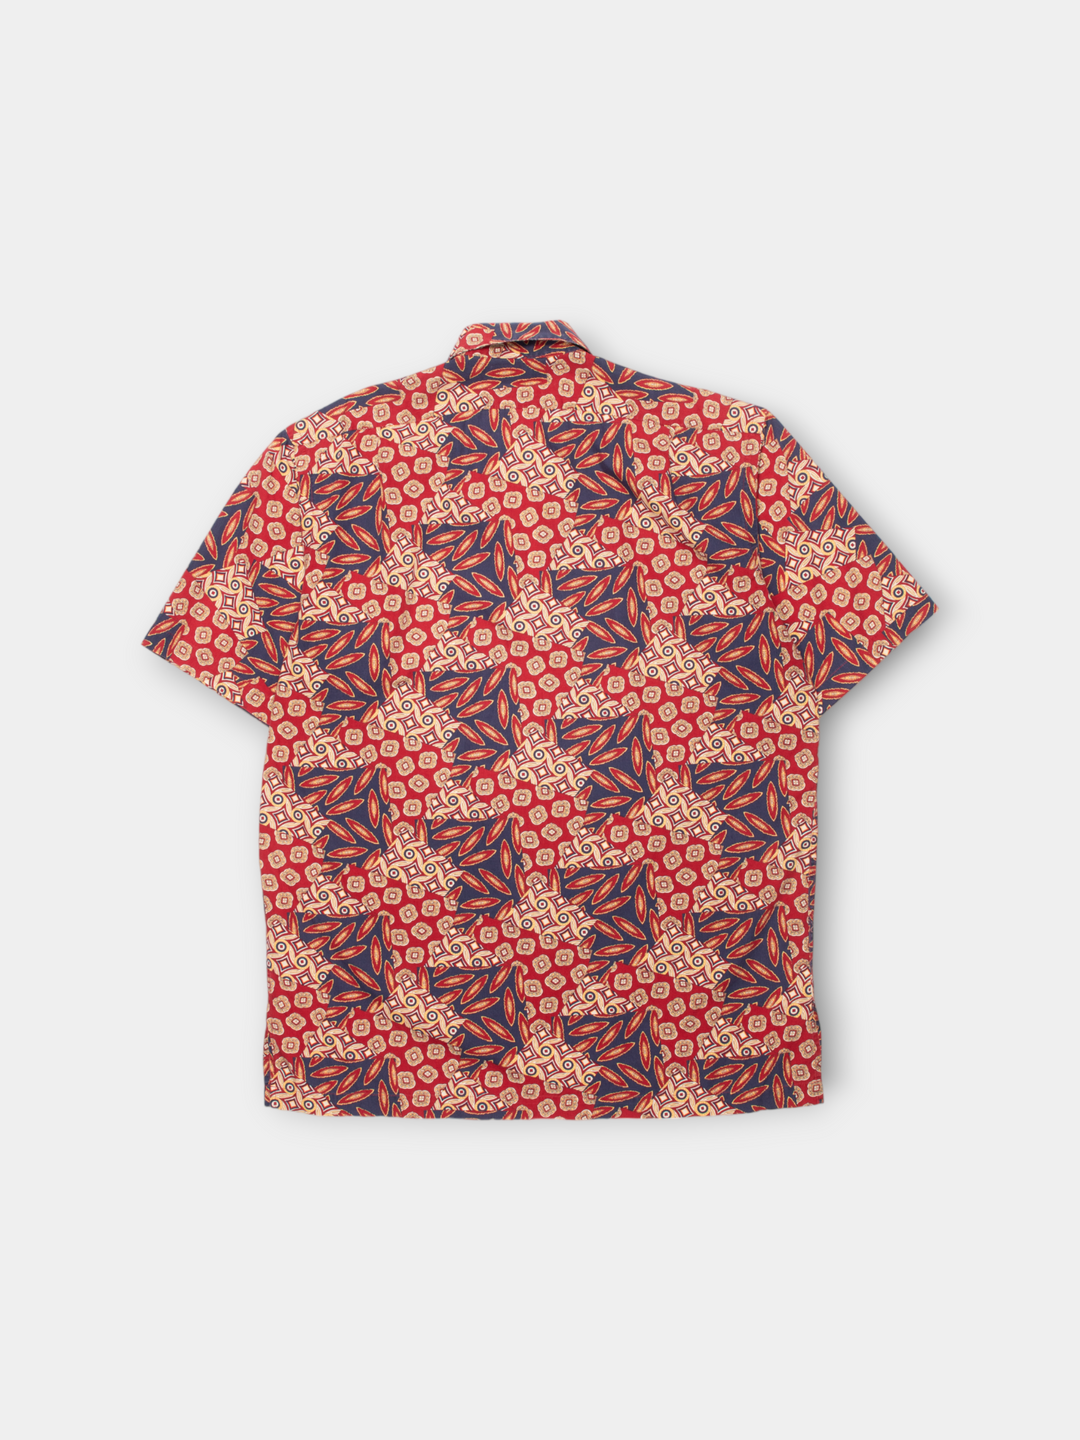 90s Ralph Lauren Abstract Hawaiian Shirt (S)